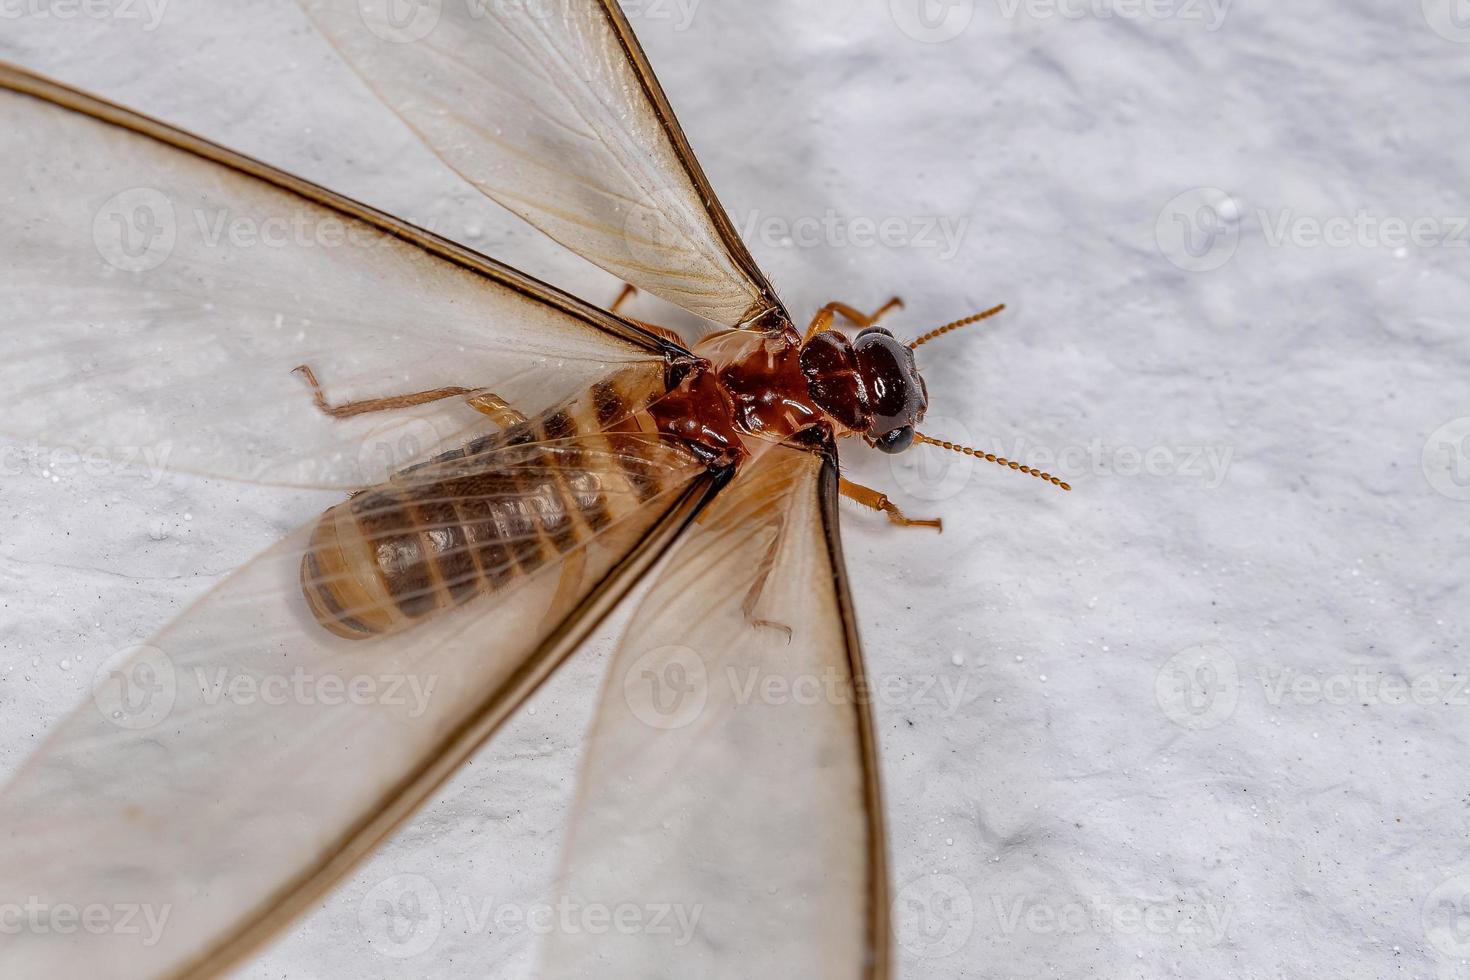 Adult Female Winged Termite photo